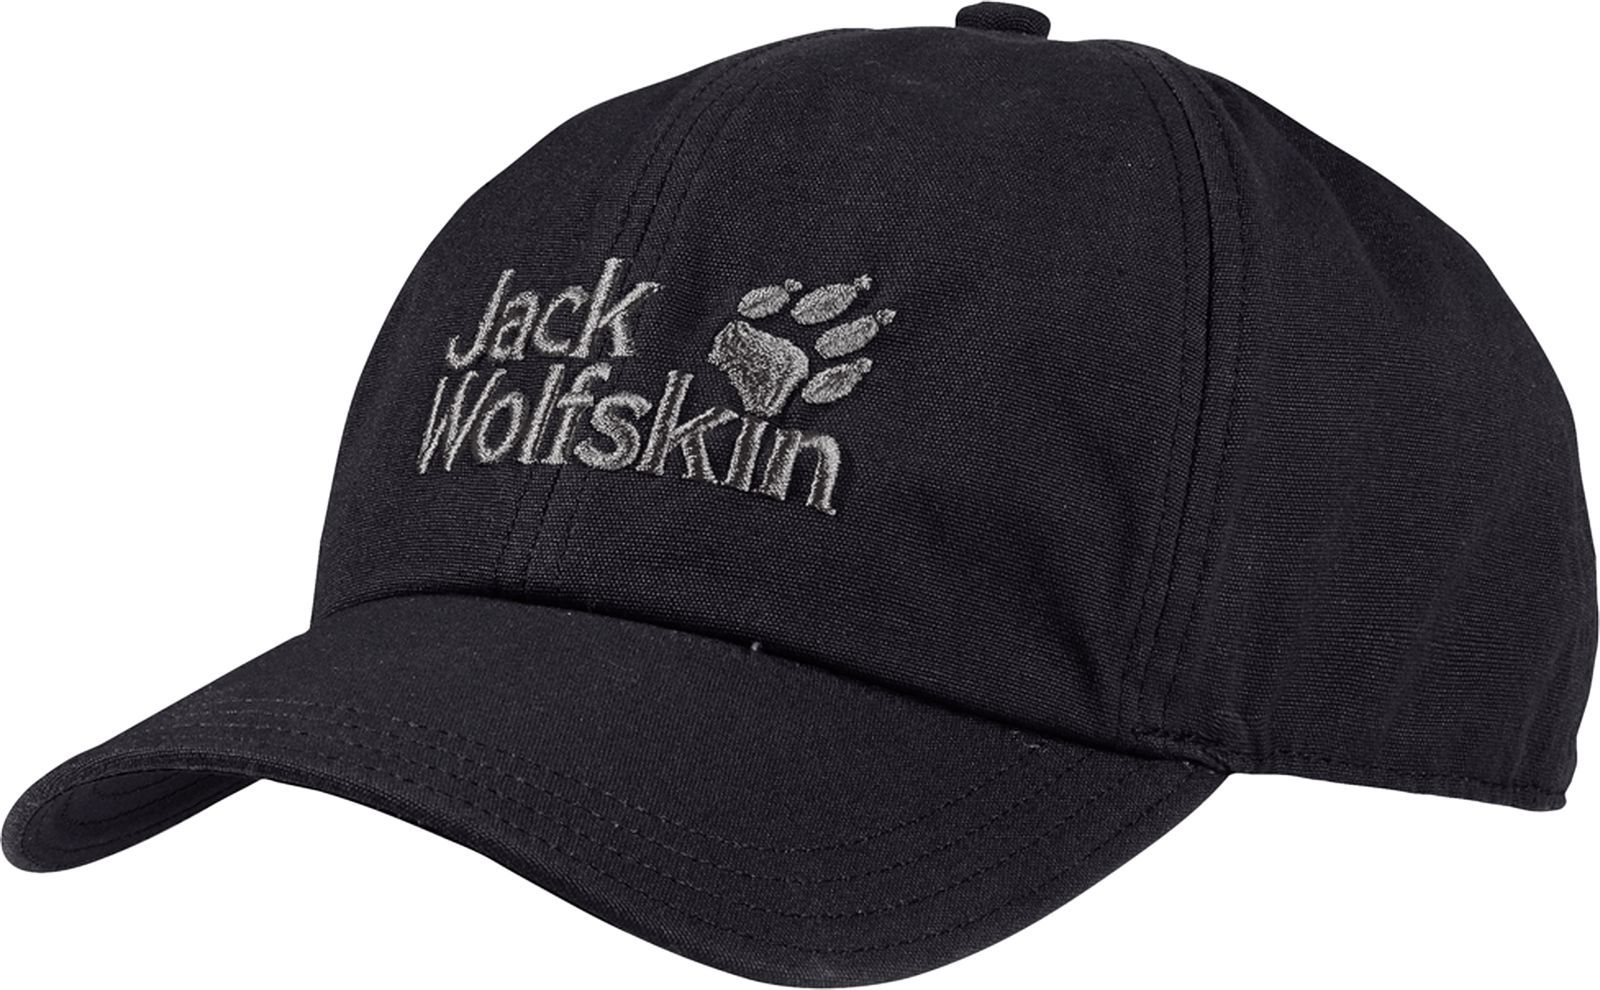  Jack Wolfskin Baseball Cap, : . 1900671_6001.  